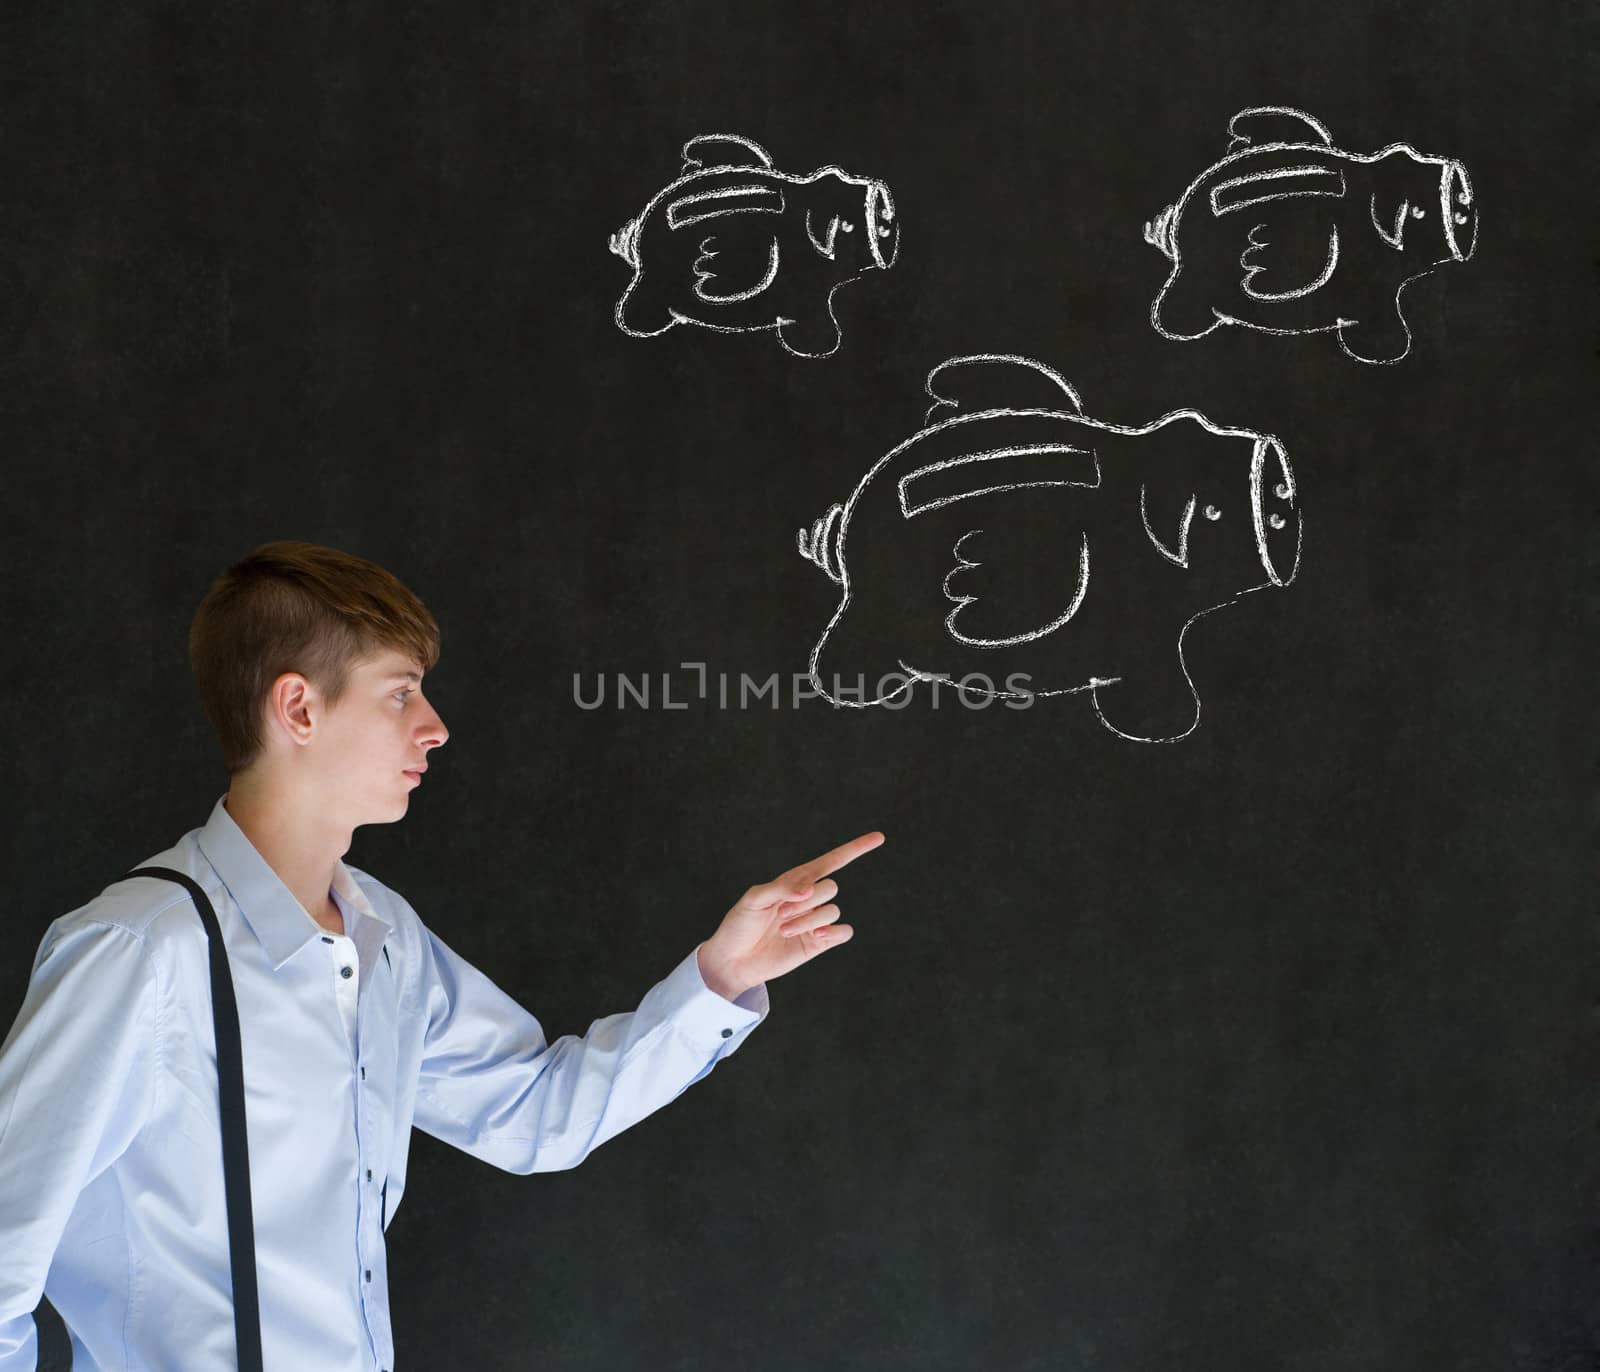 Businessman pointing at flying money piggy banks in chalk on blackboard background